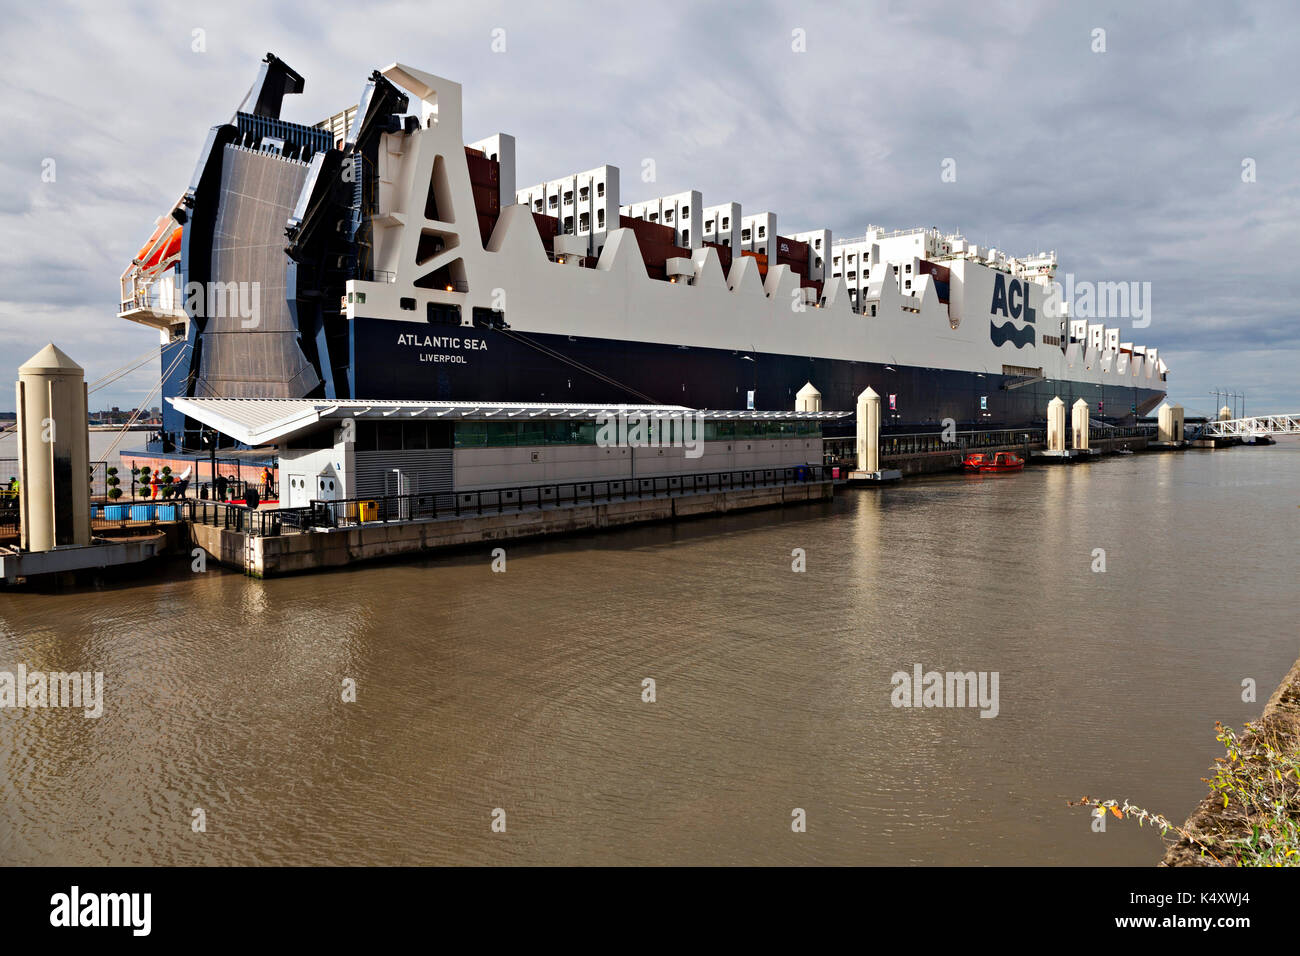 ACL (Atlantic Container Line) vessel, Atlantic Sea, built 2016, at ...